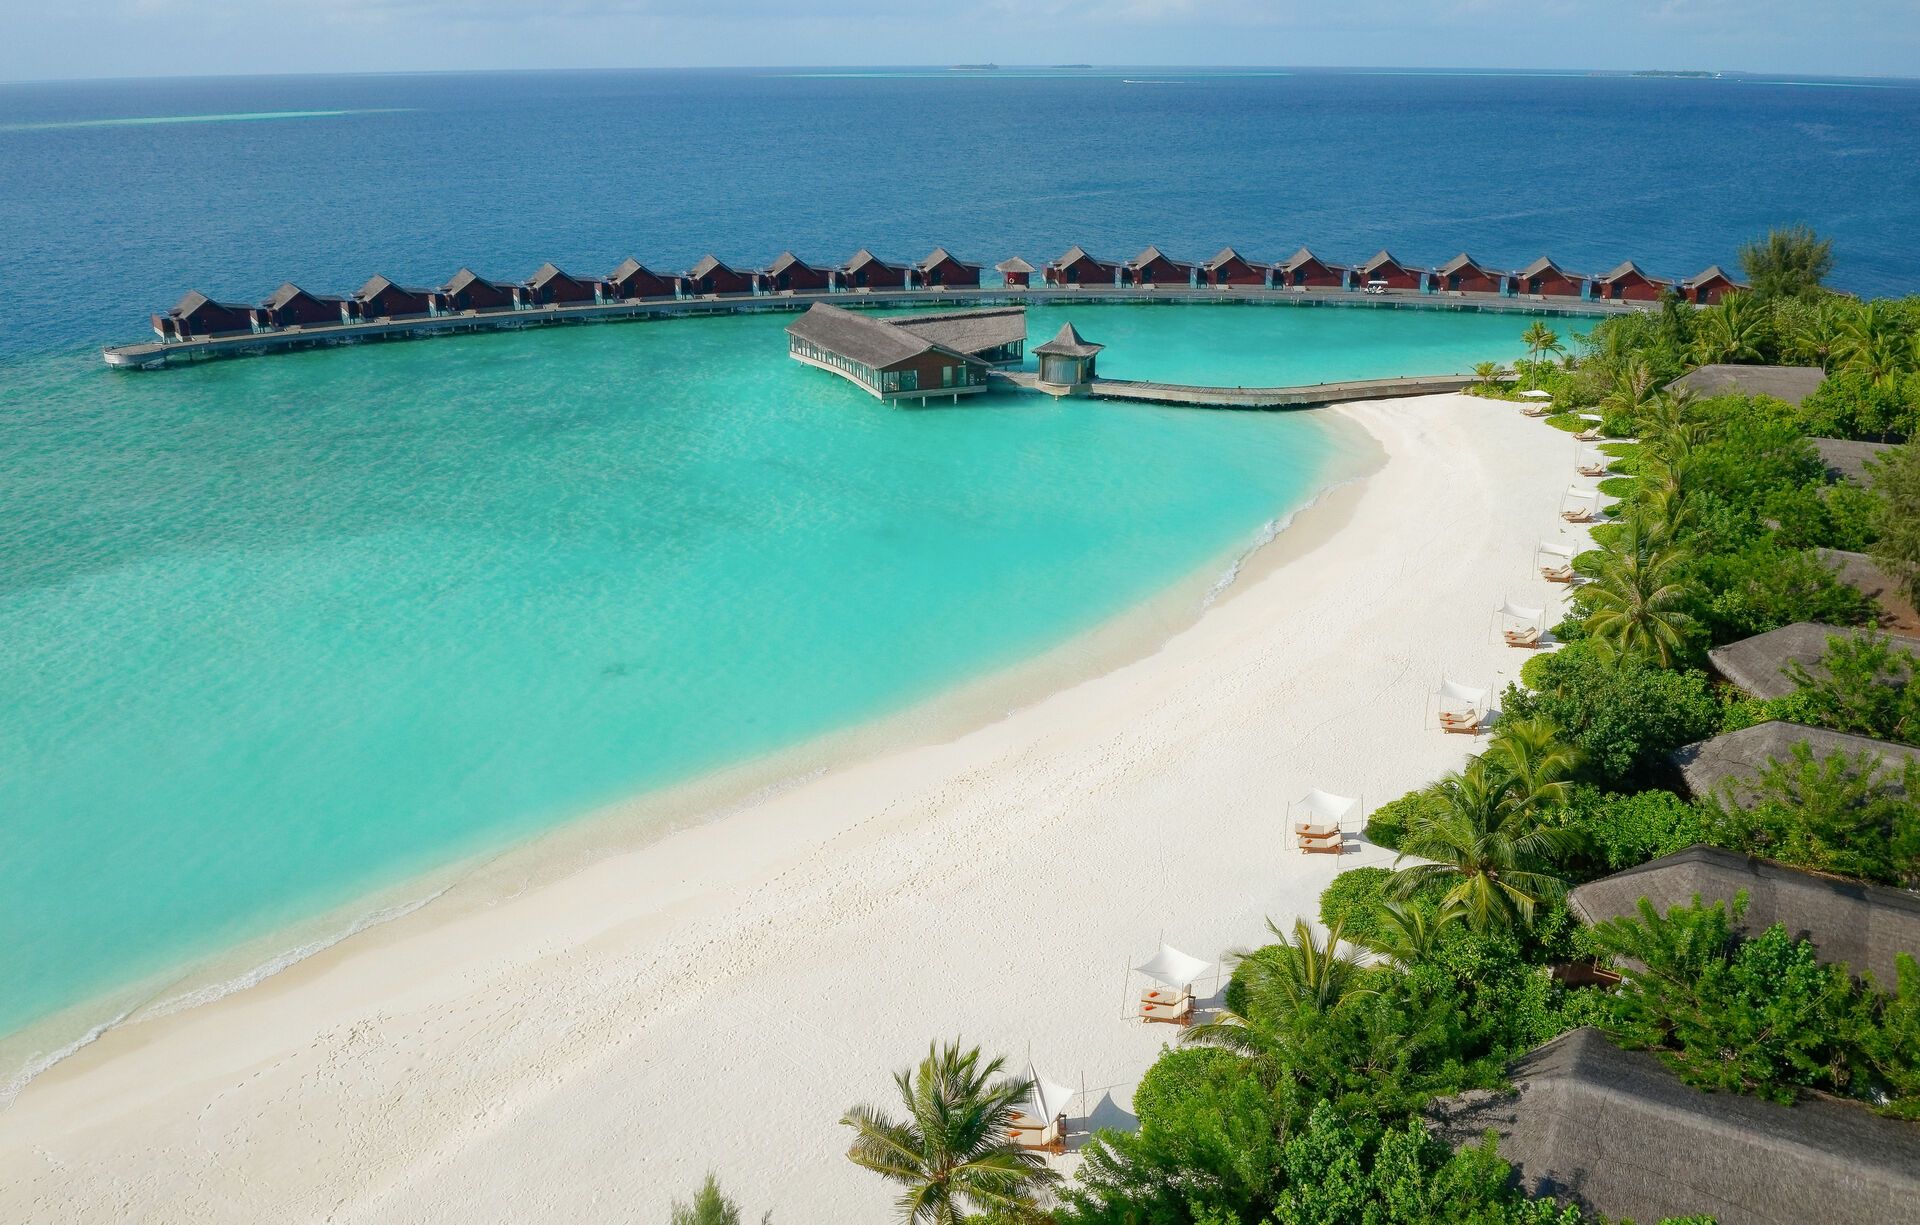 Maldives - Hotel Grand Park Kodhipparu 5* - transfert inclus